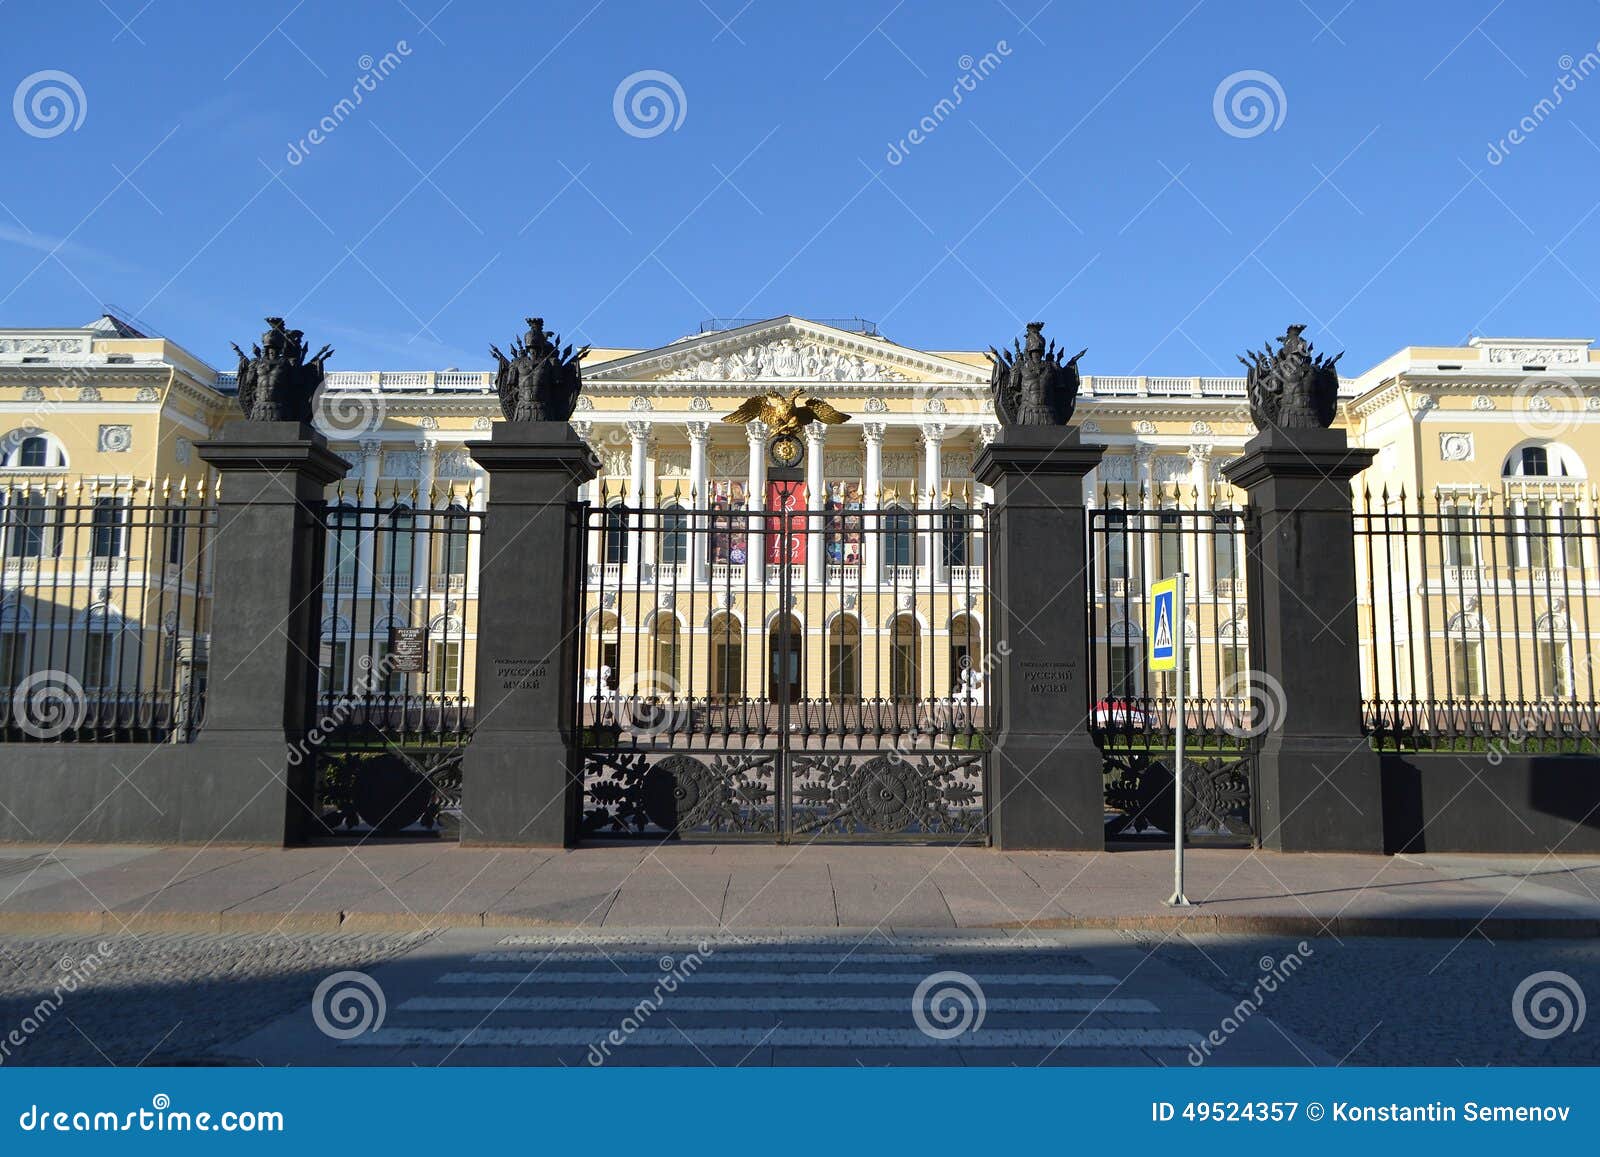 State Russian Museum Design 115